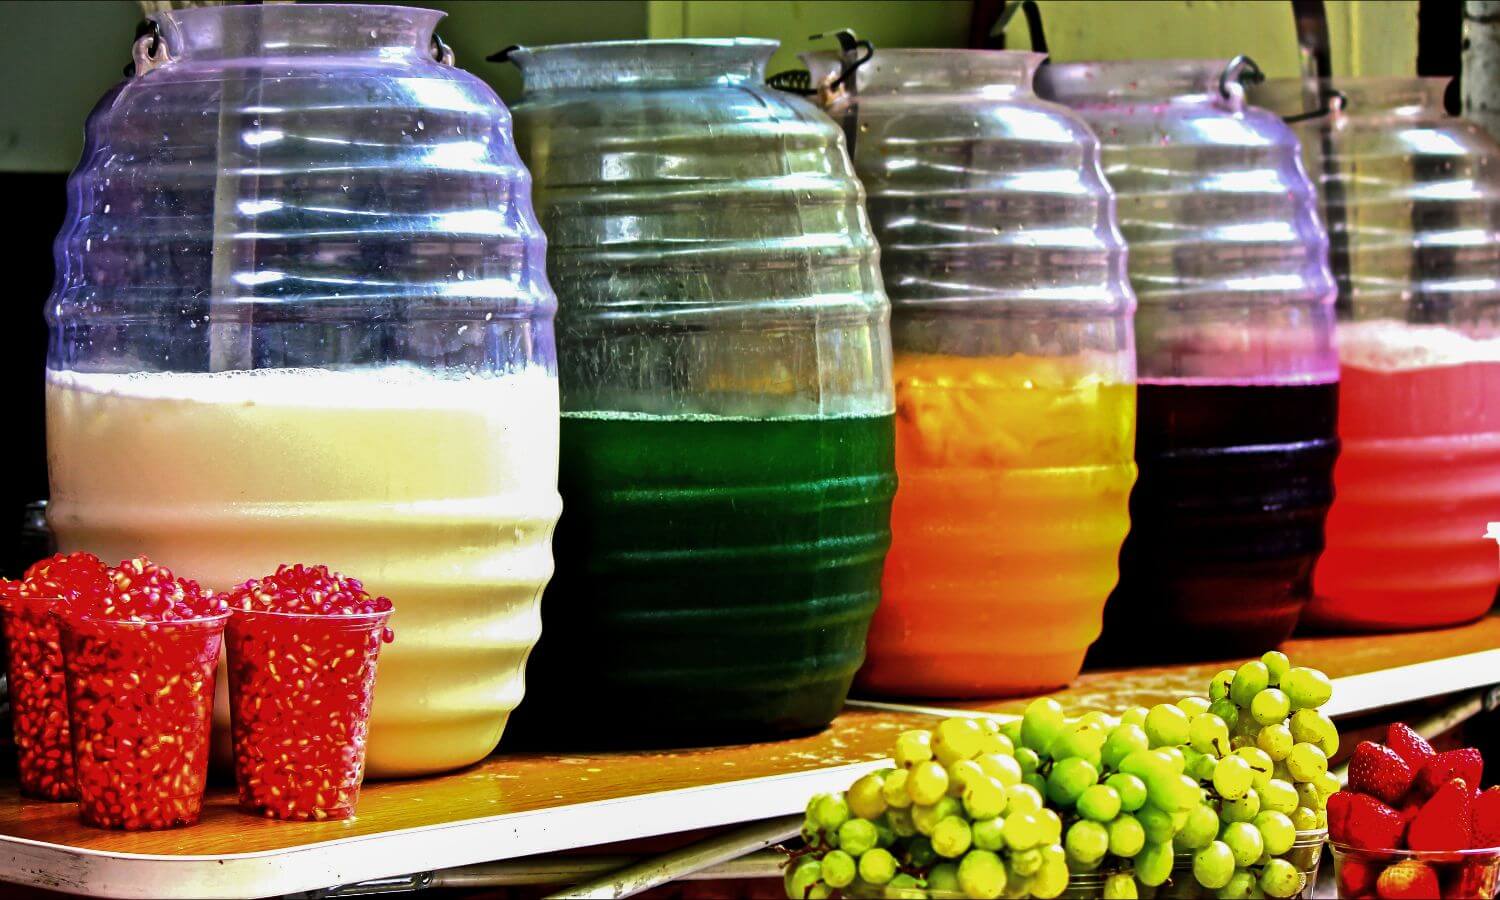 Large jars of Aguas Frescas in a Market